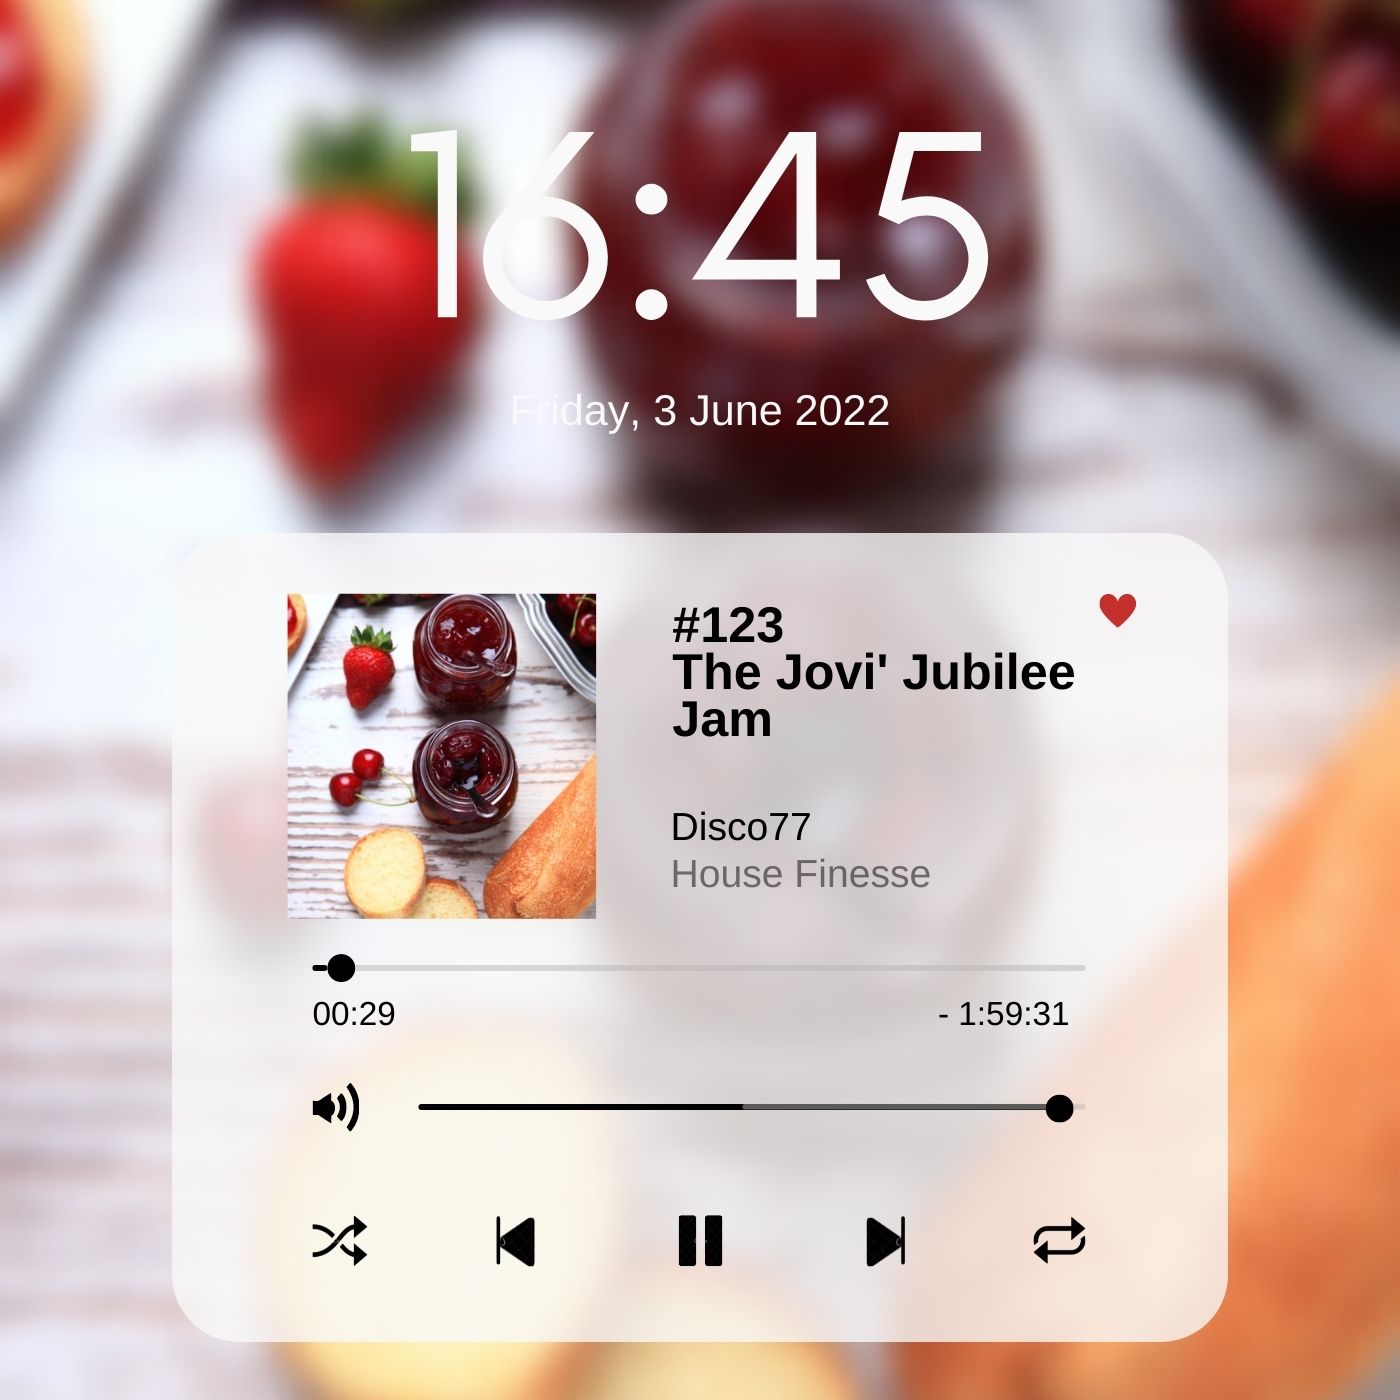 The Jovi' Jubilee Jam with Disco77